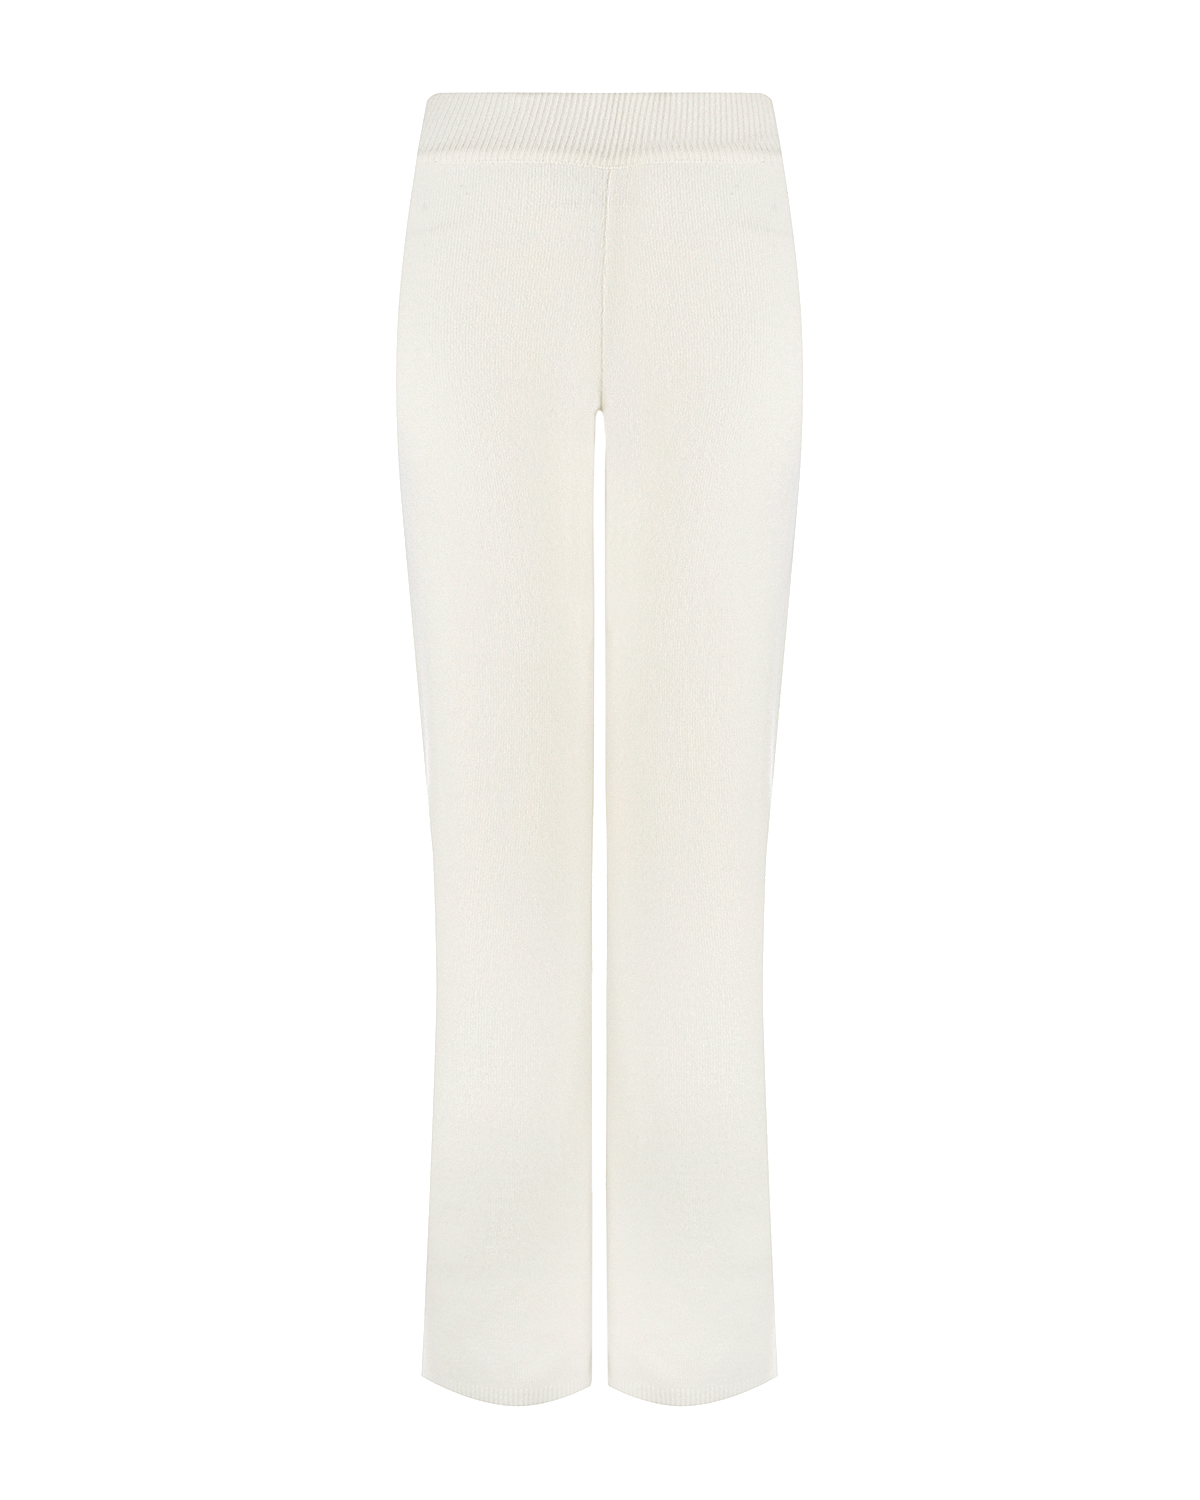 Трикотажные брюки молочного цвета Pietro Brunelli, размер 42